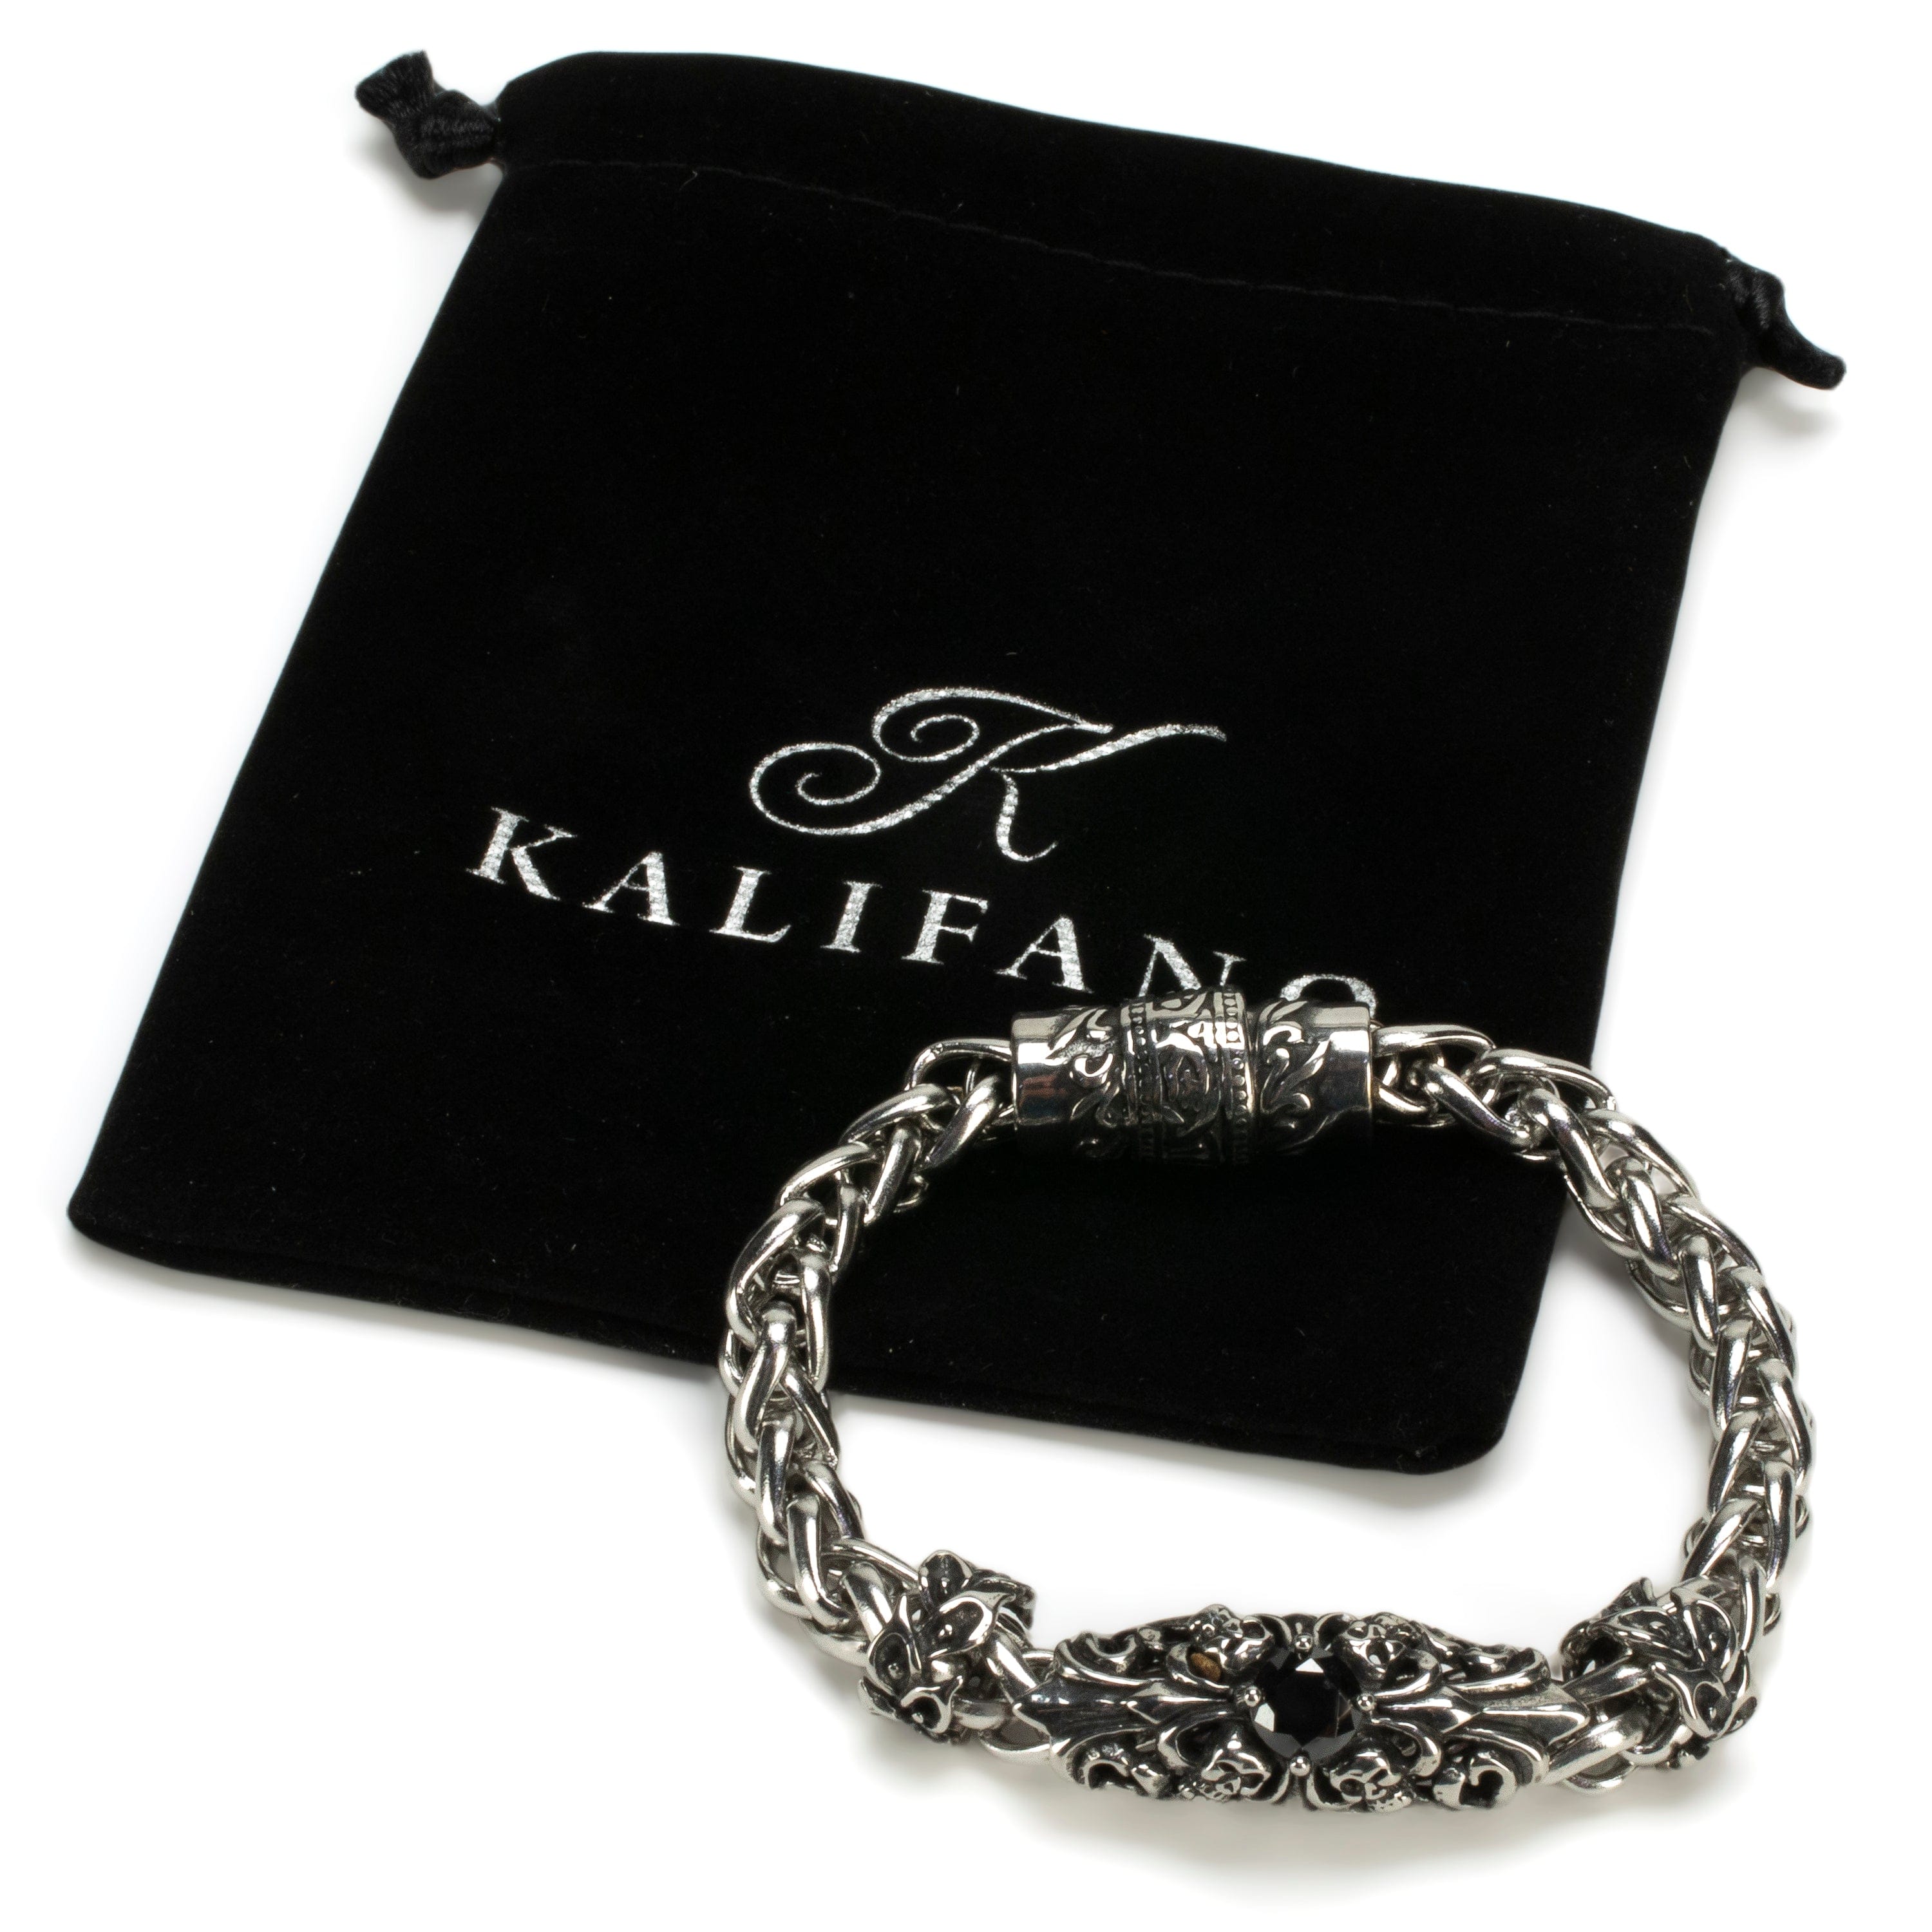 Kalifano Steel Hearts Jewelry Stainless Steel Bracelet Cross with Black Crystal PLAT-BSS-12